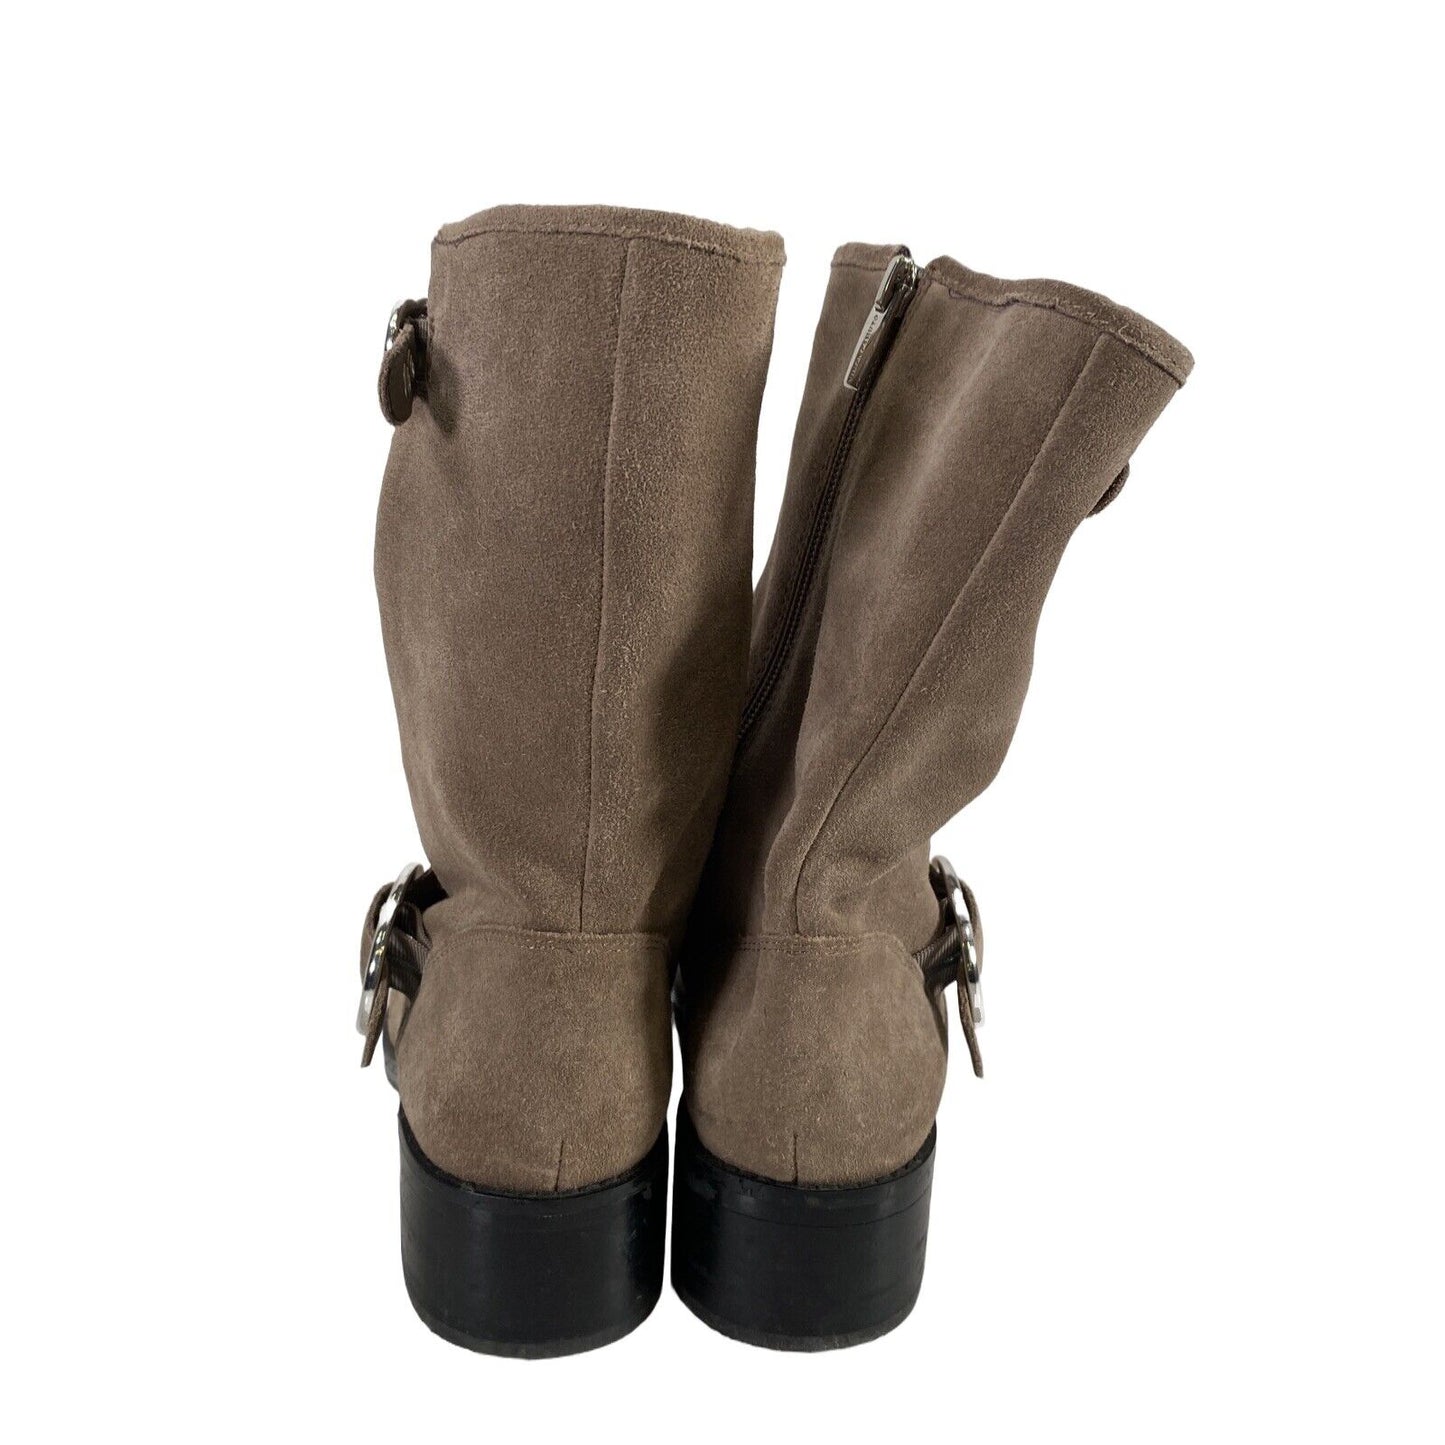 Crown Vintage Women's Taupe/Beige Suede Side Zip Mid Calf Boots - 7M